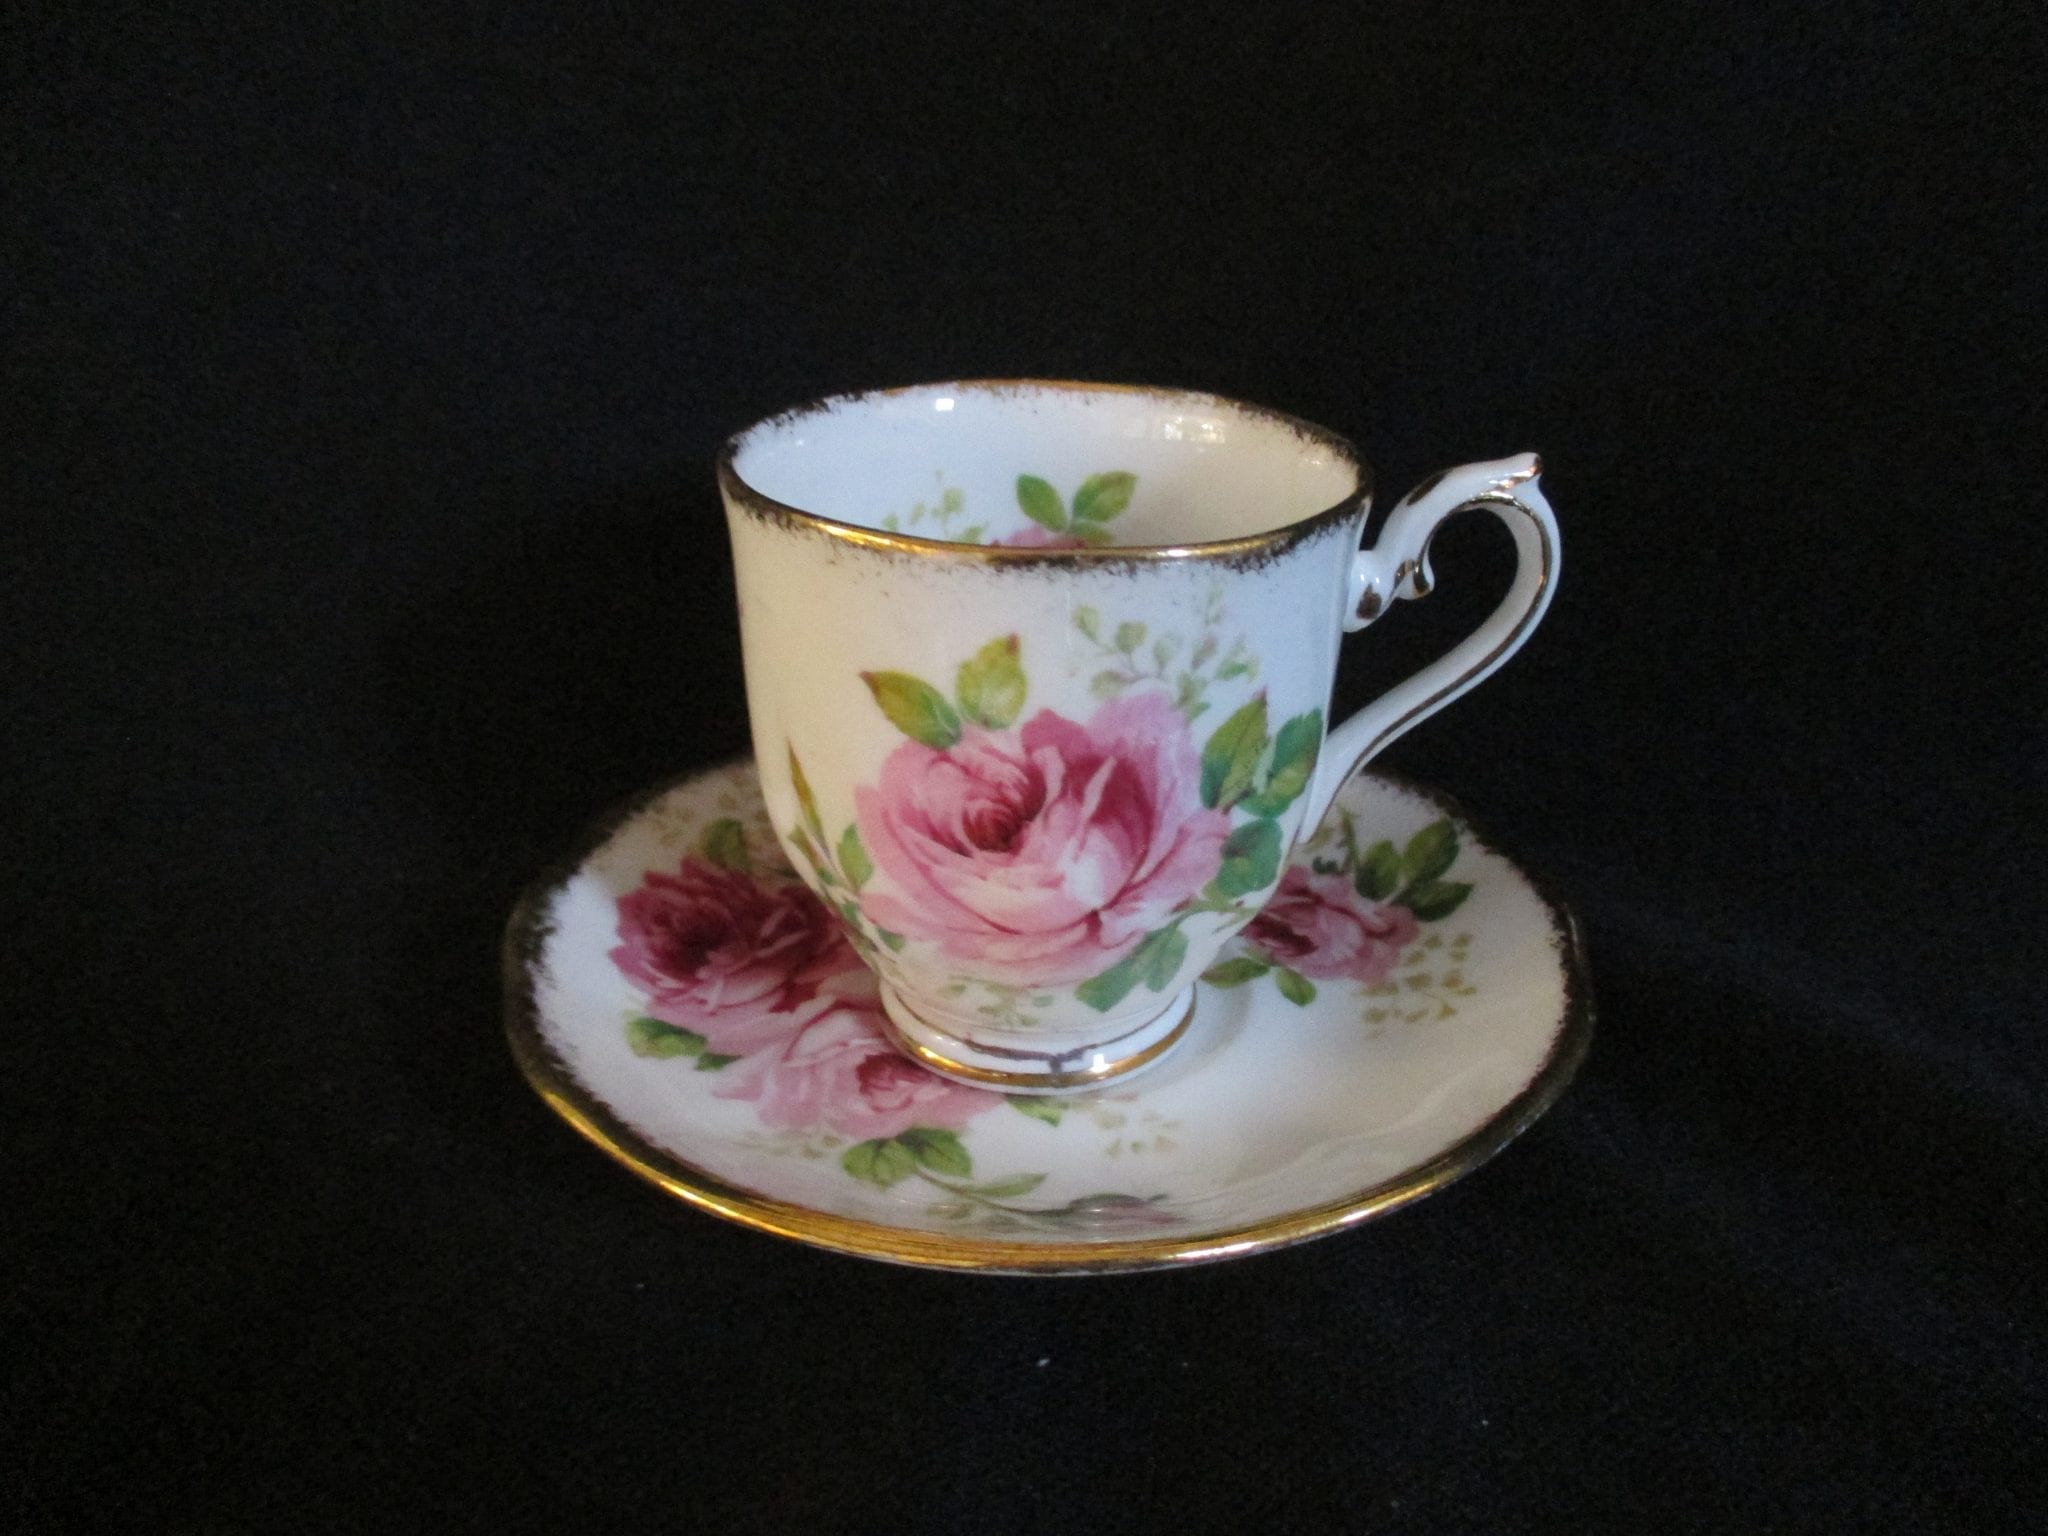 Vintage Royal Albert American Beauty Teacup and Saucer